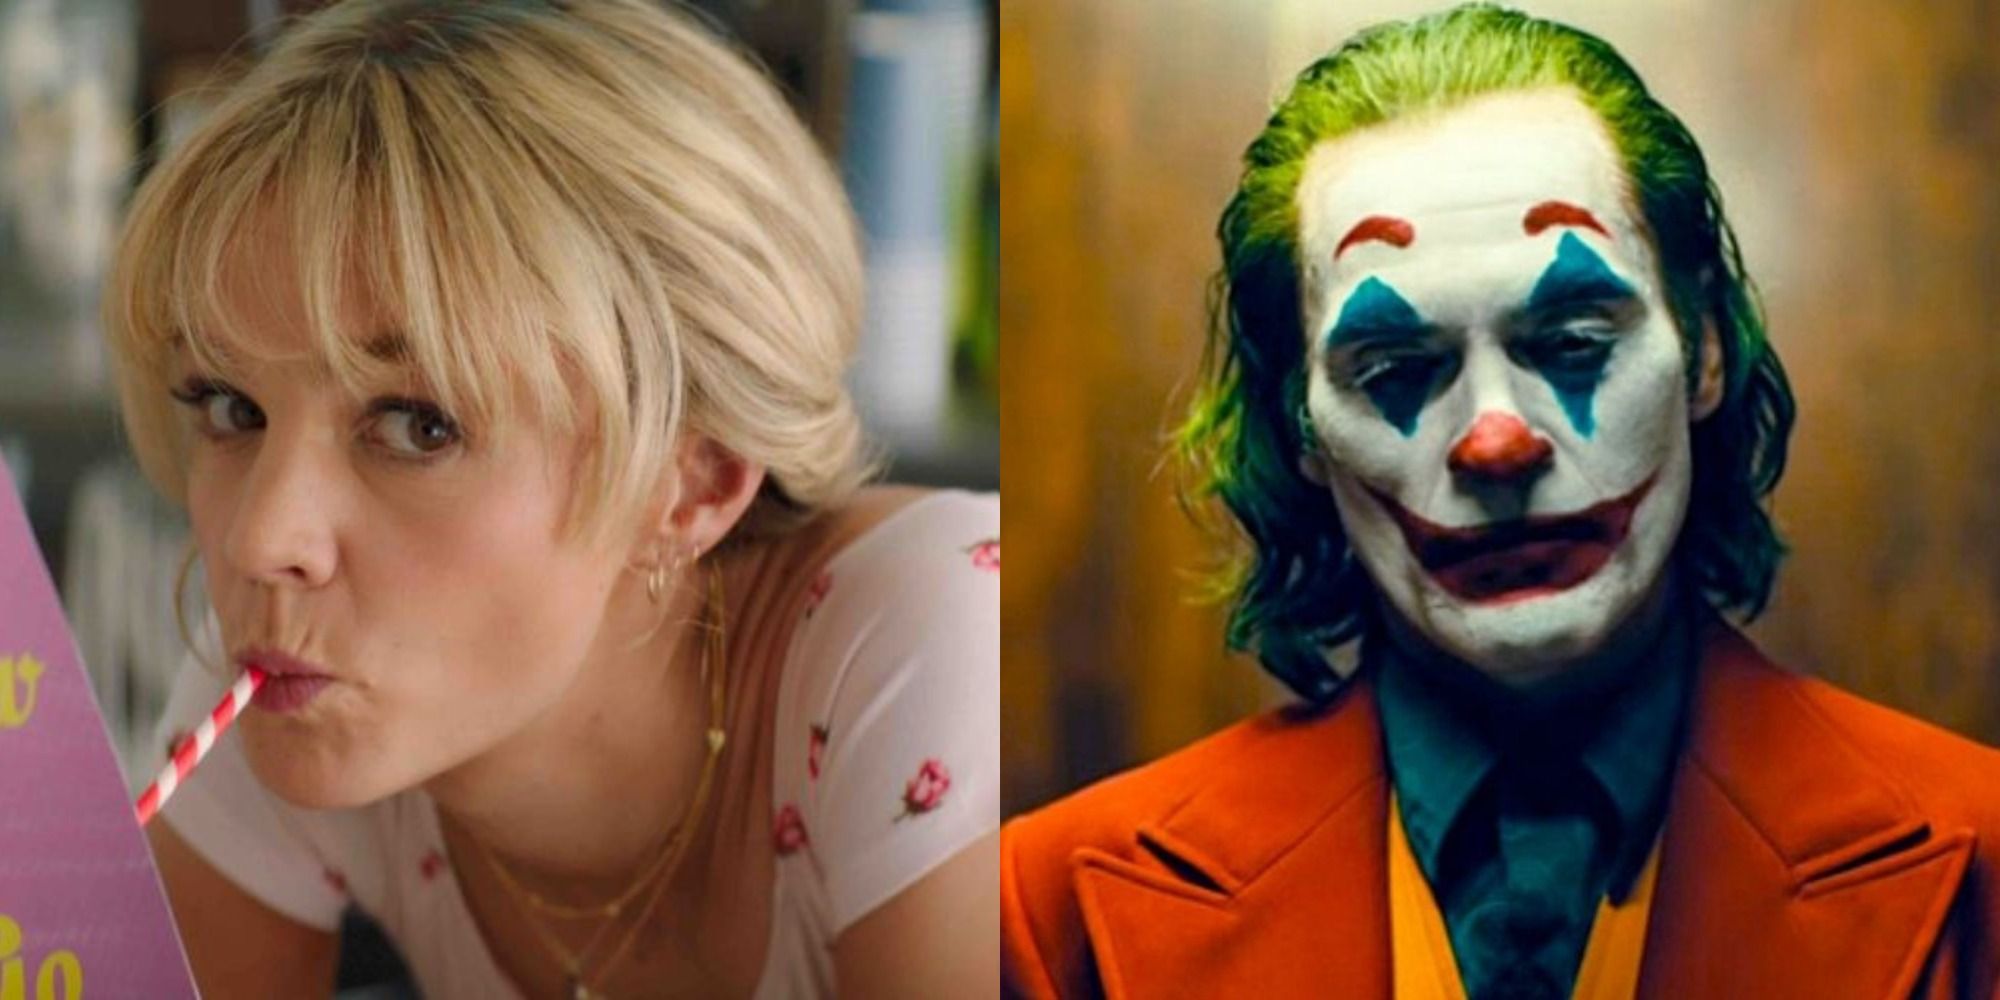 Carey Mulligan in Promising Young Woman and Joaquin Phoenix in Joker